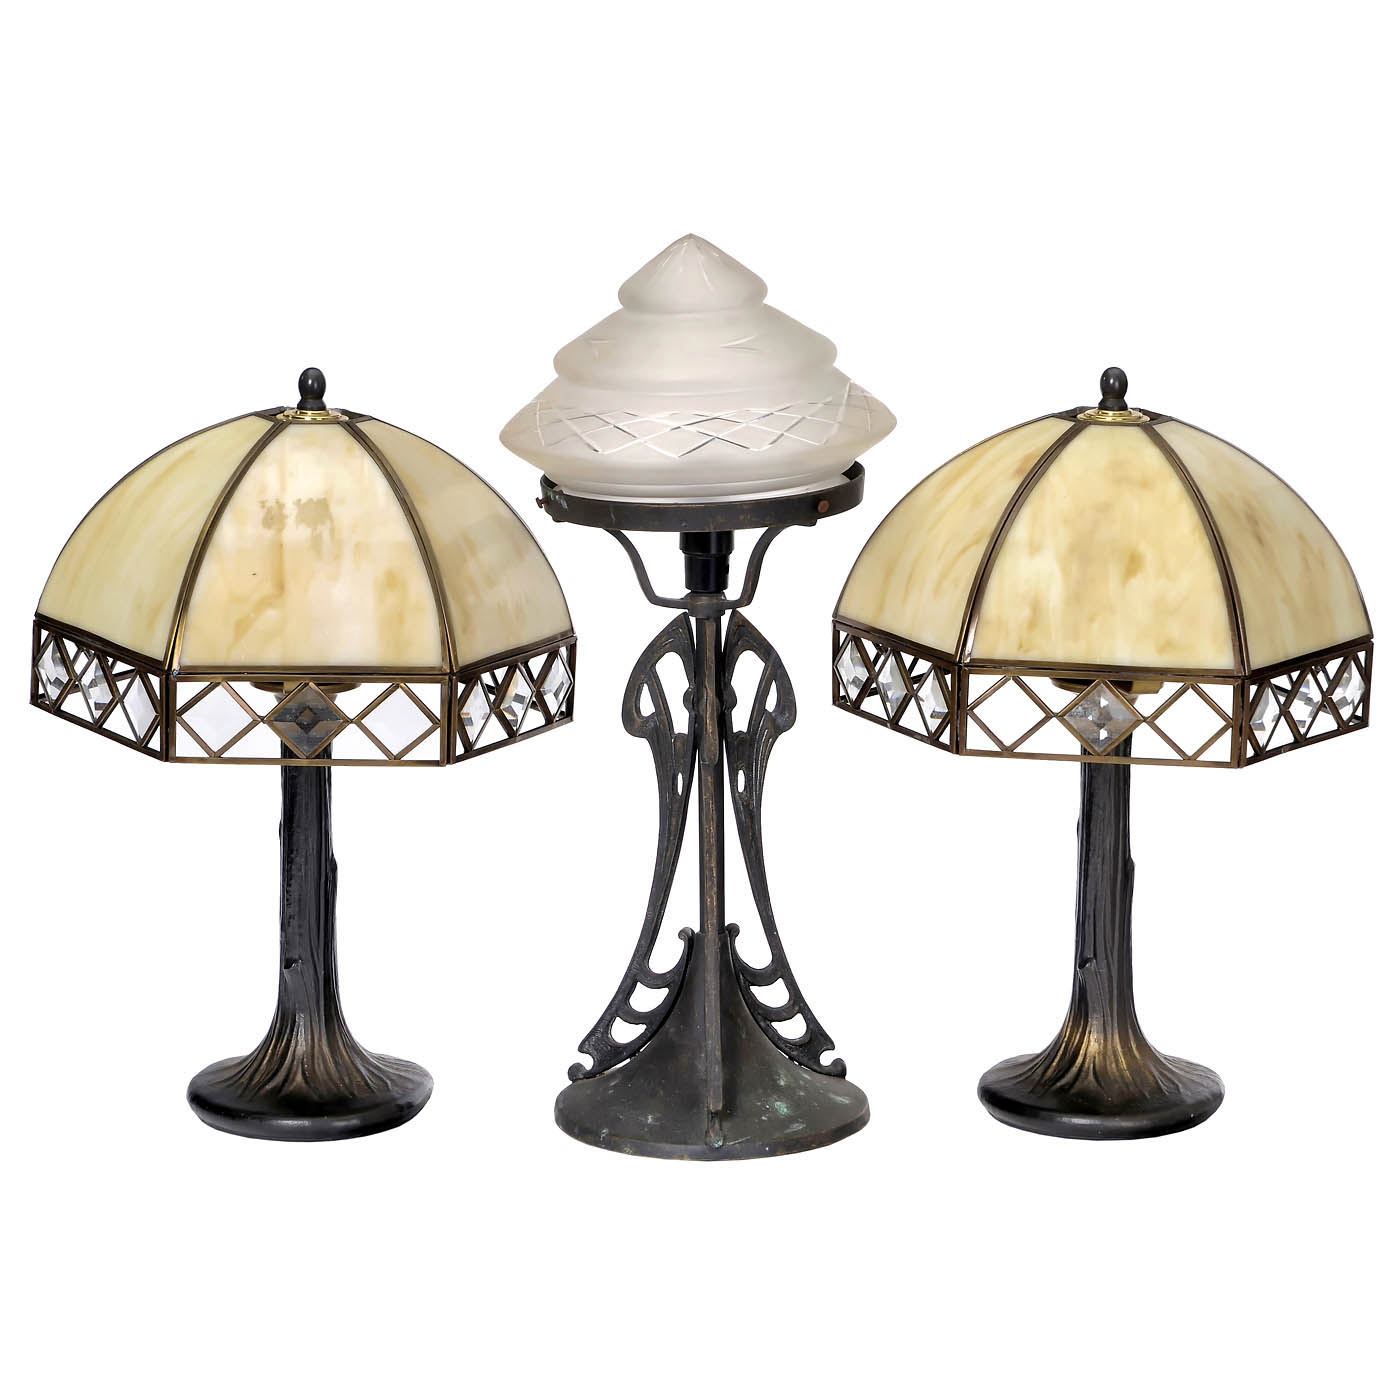 6 Art-Nouveau and Art-Deco-Style Table Lamps, c. 1980 - Image 4 of 4